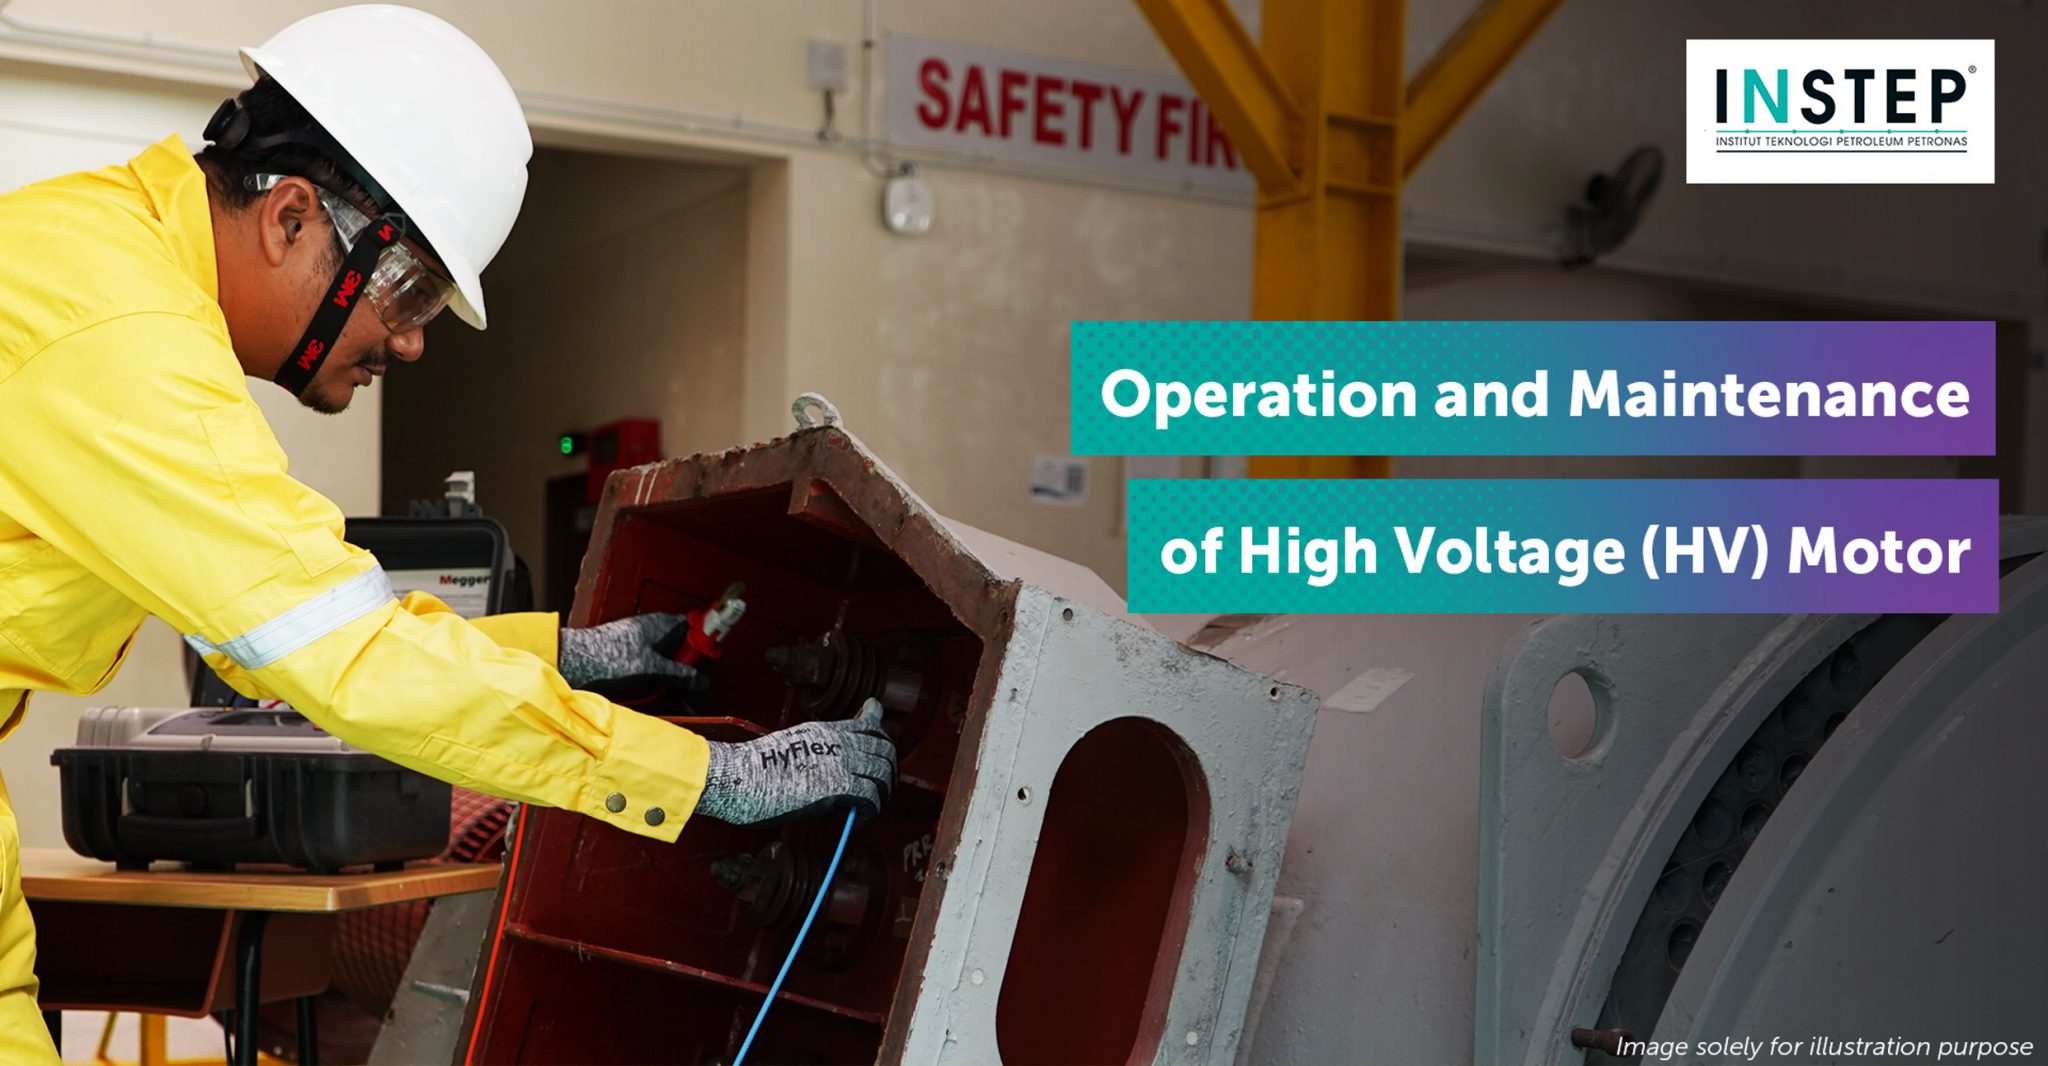 [NEW] Operation and Maintenance of High Voltage (HV) Motor via Virtual Instructor-Led Training (VILT)